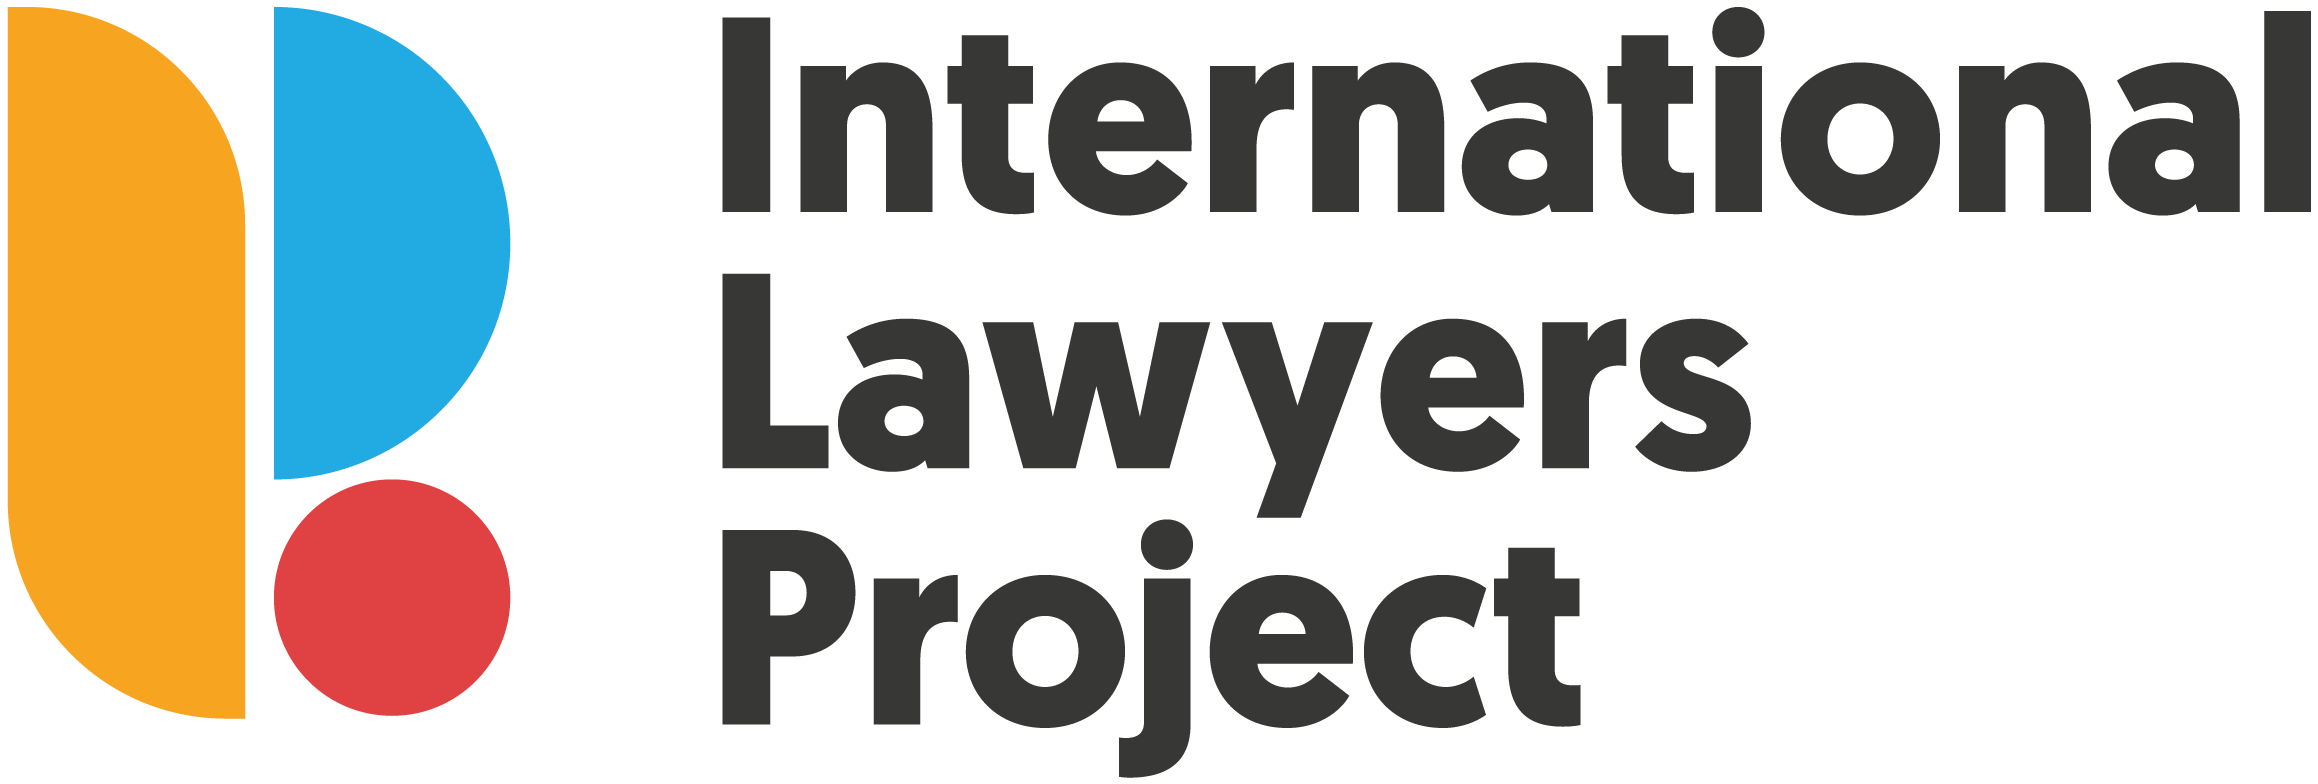 Logo: International Lawyers Project